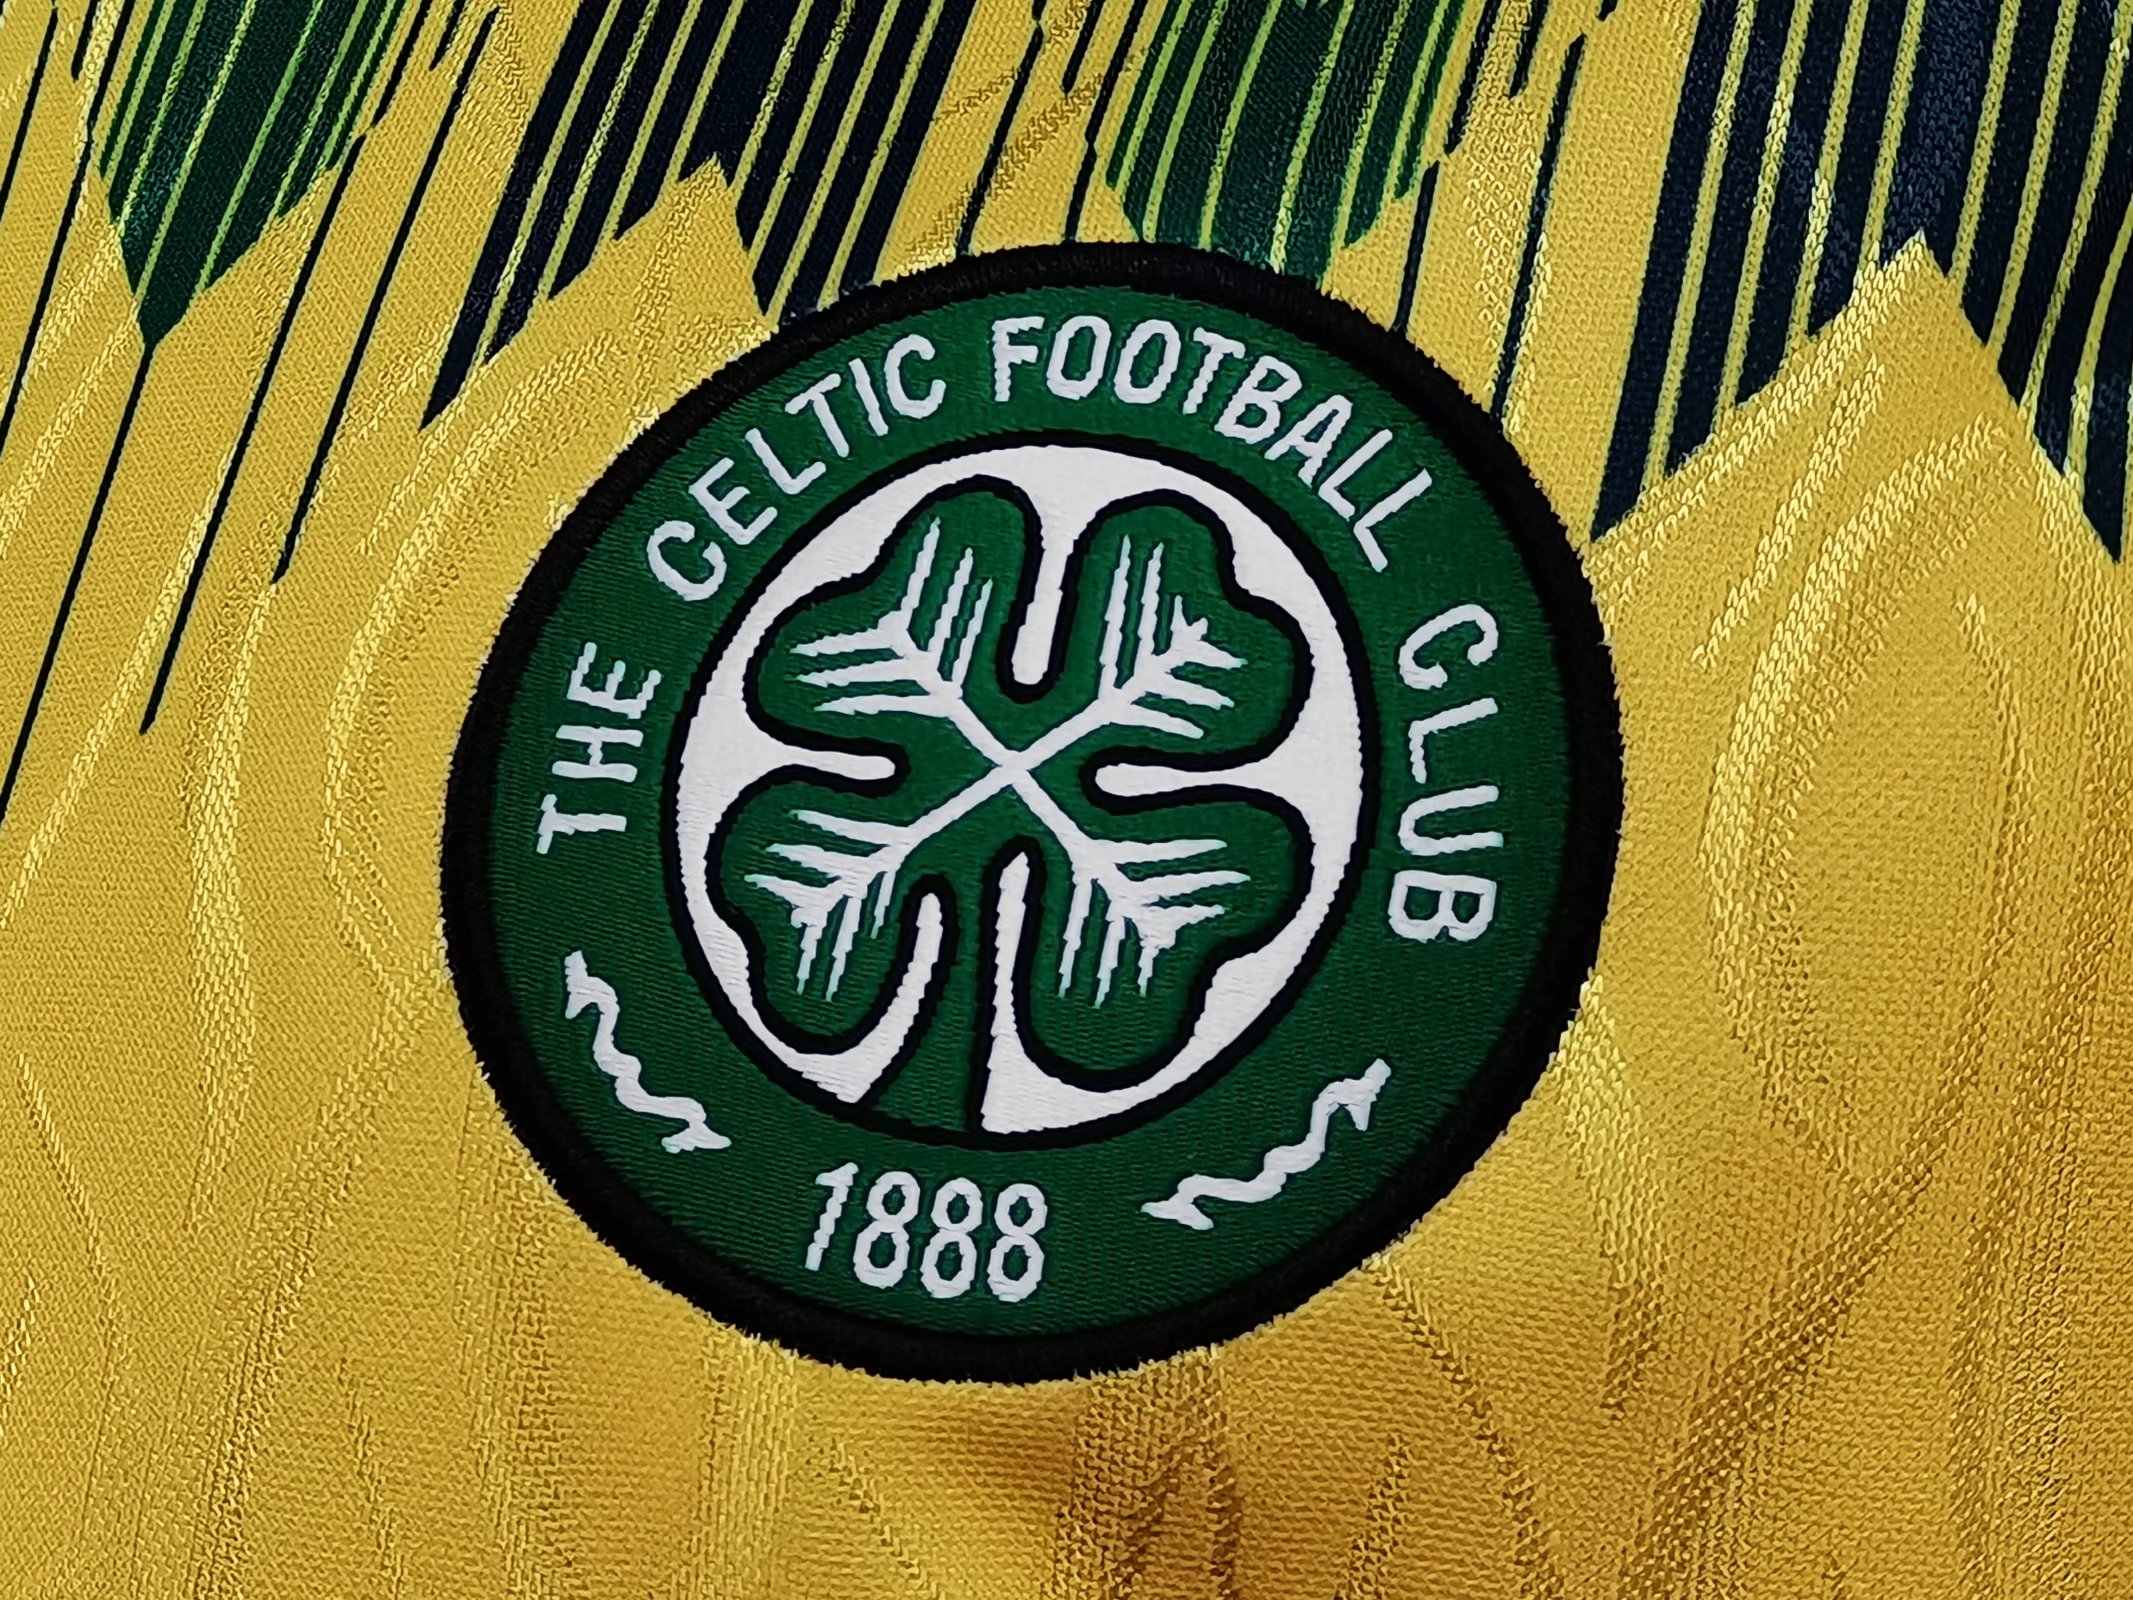 1992-93 Celtic Retro Jersey